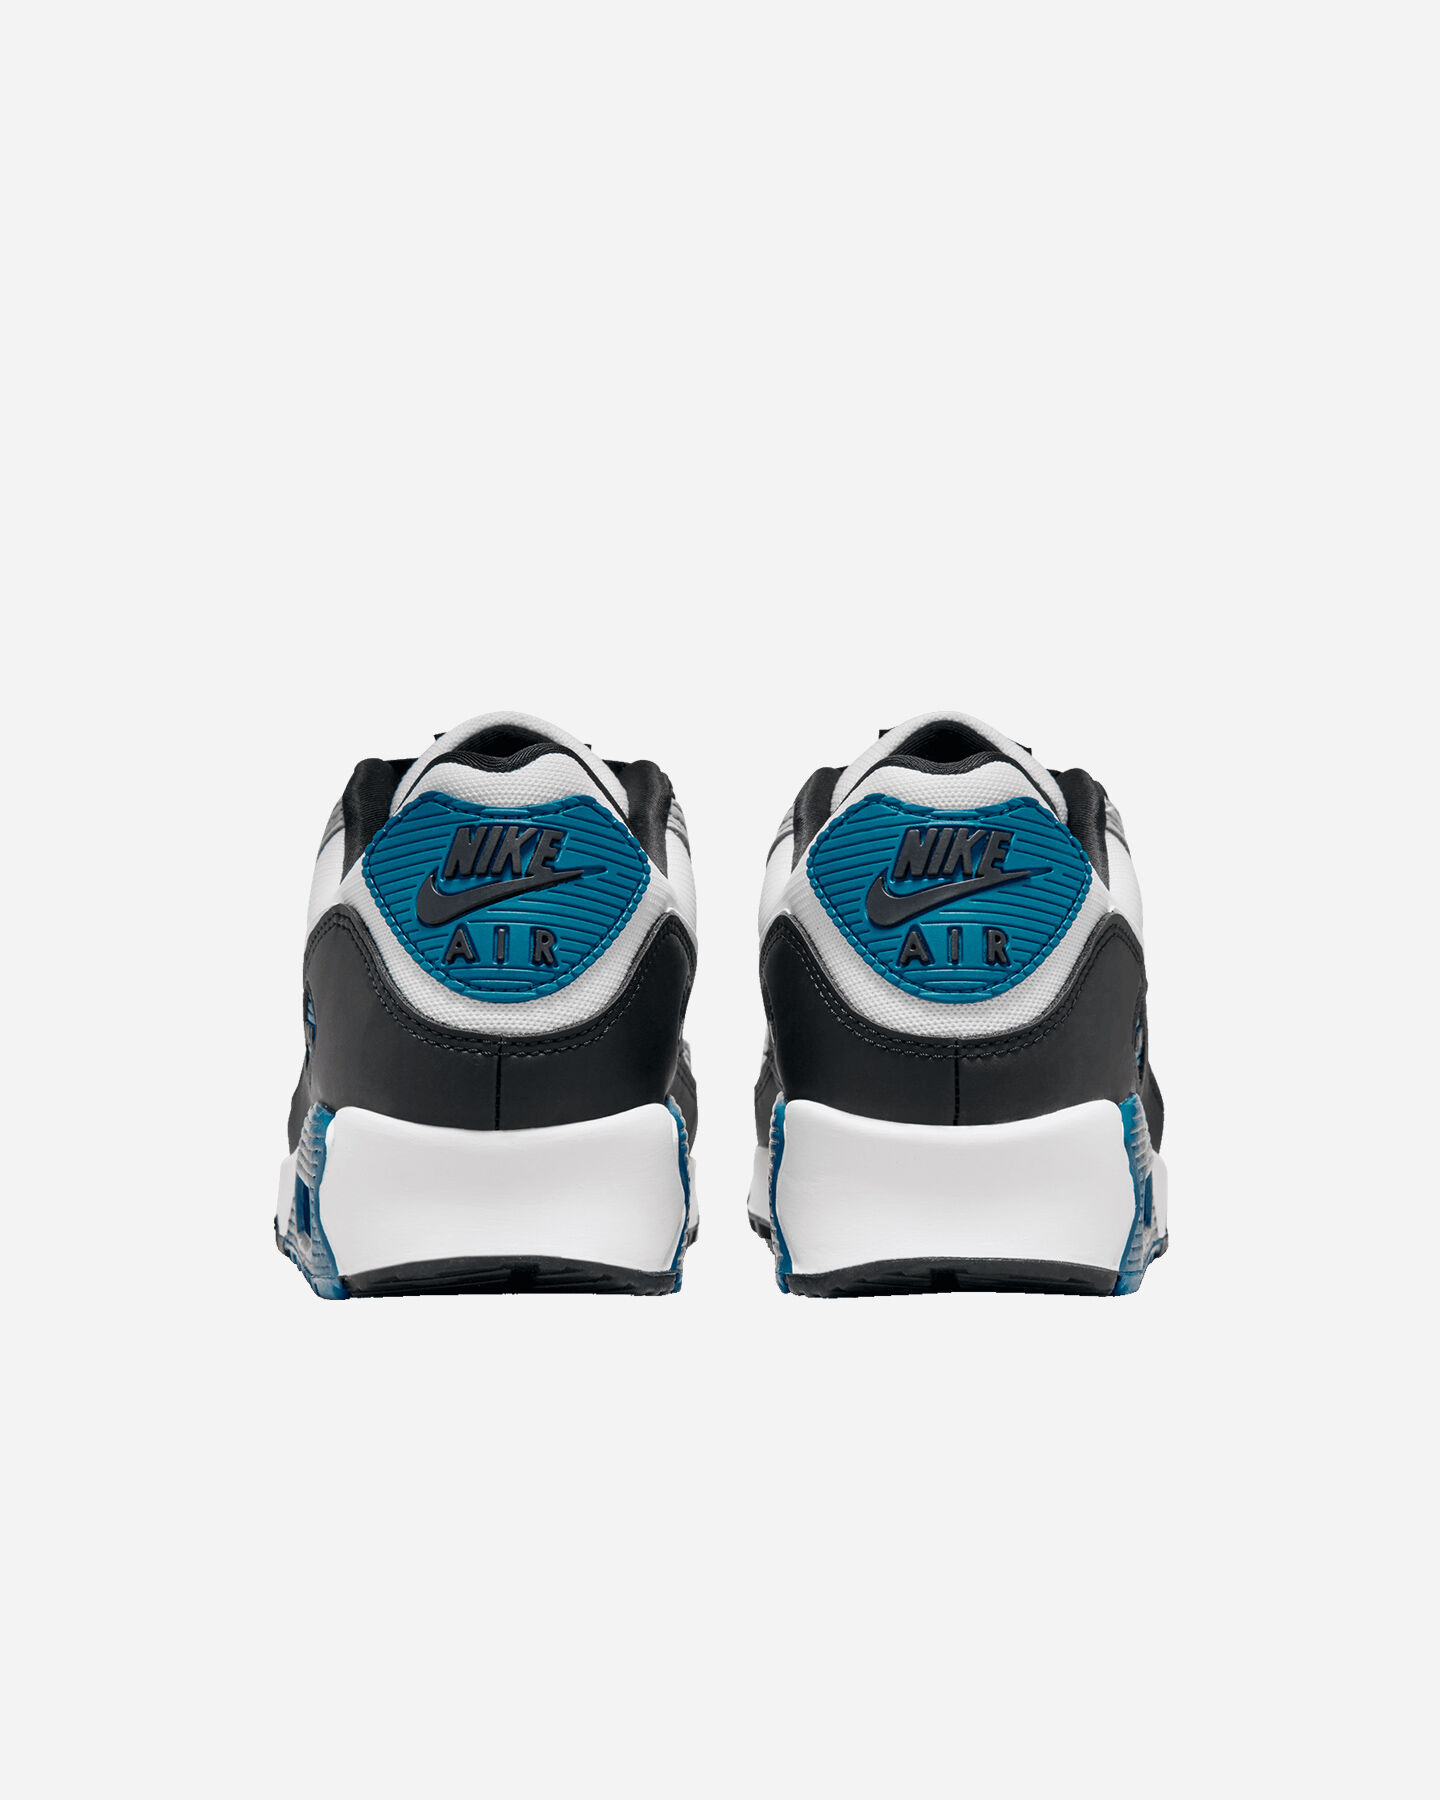  Scarpe sneakers NIKE AIR MAX 90 LT M S5628803|002|12 scatto 4